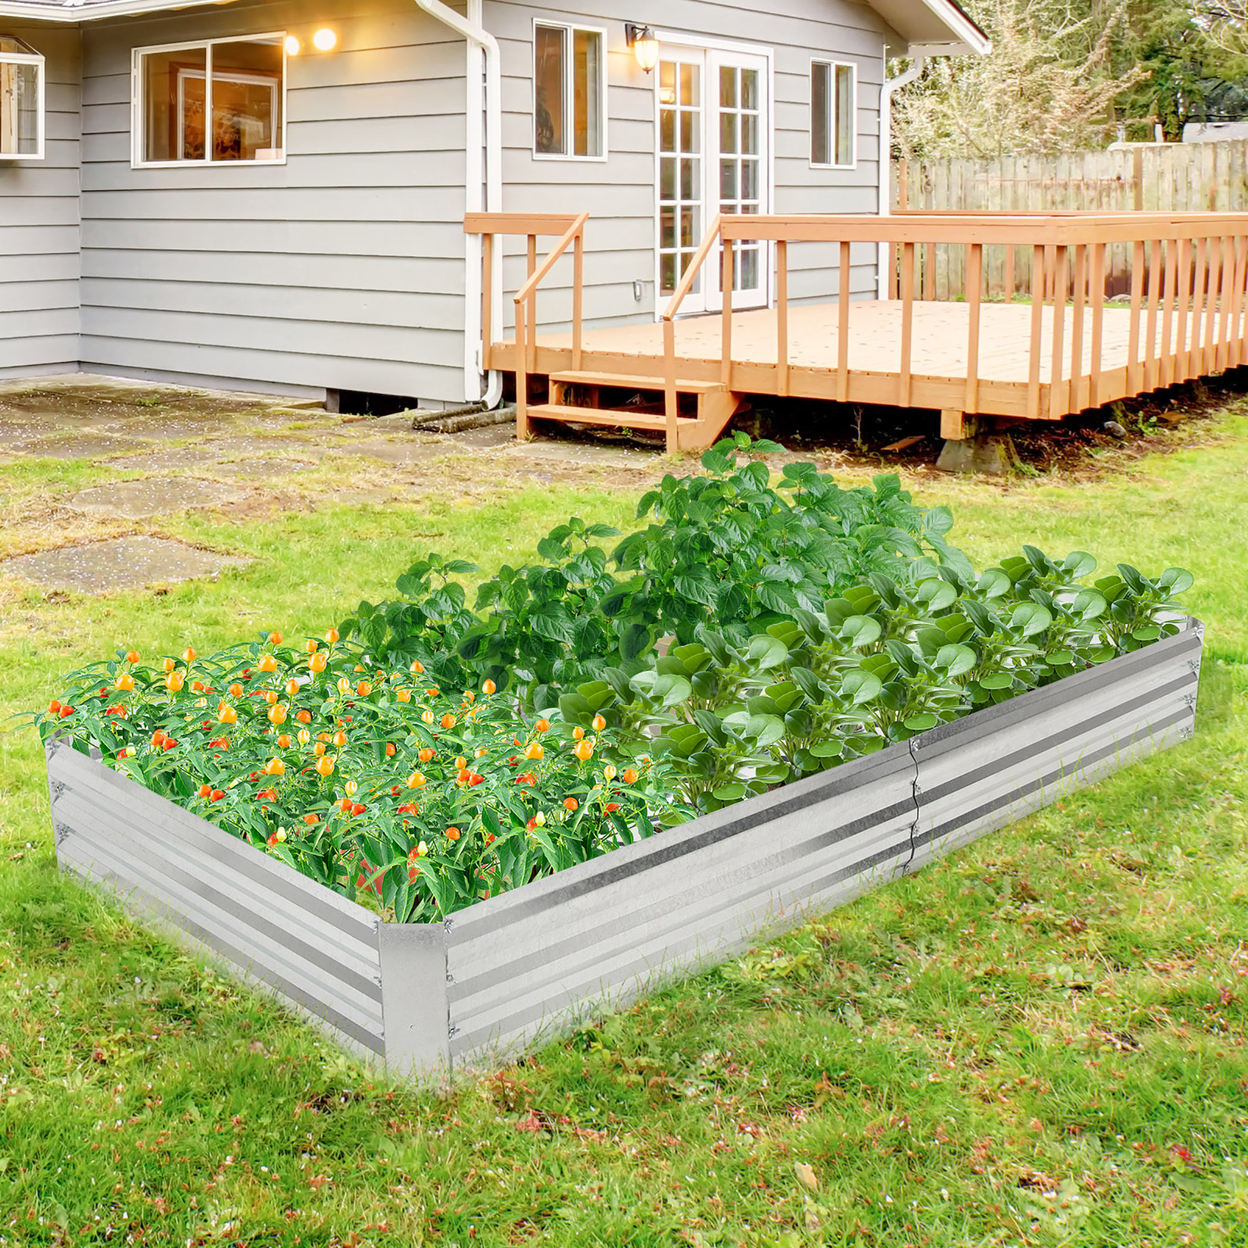 2PCS Galvanized Raised Garden Bed Elevated Rectangle Plant Box 8 X 4 X 1FT